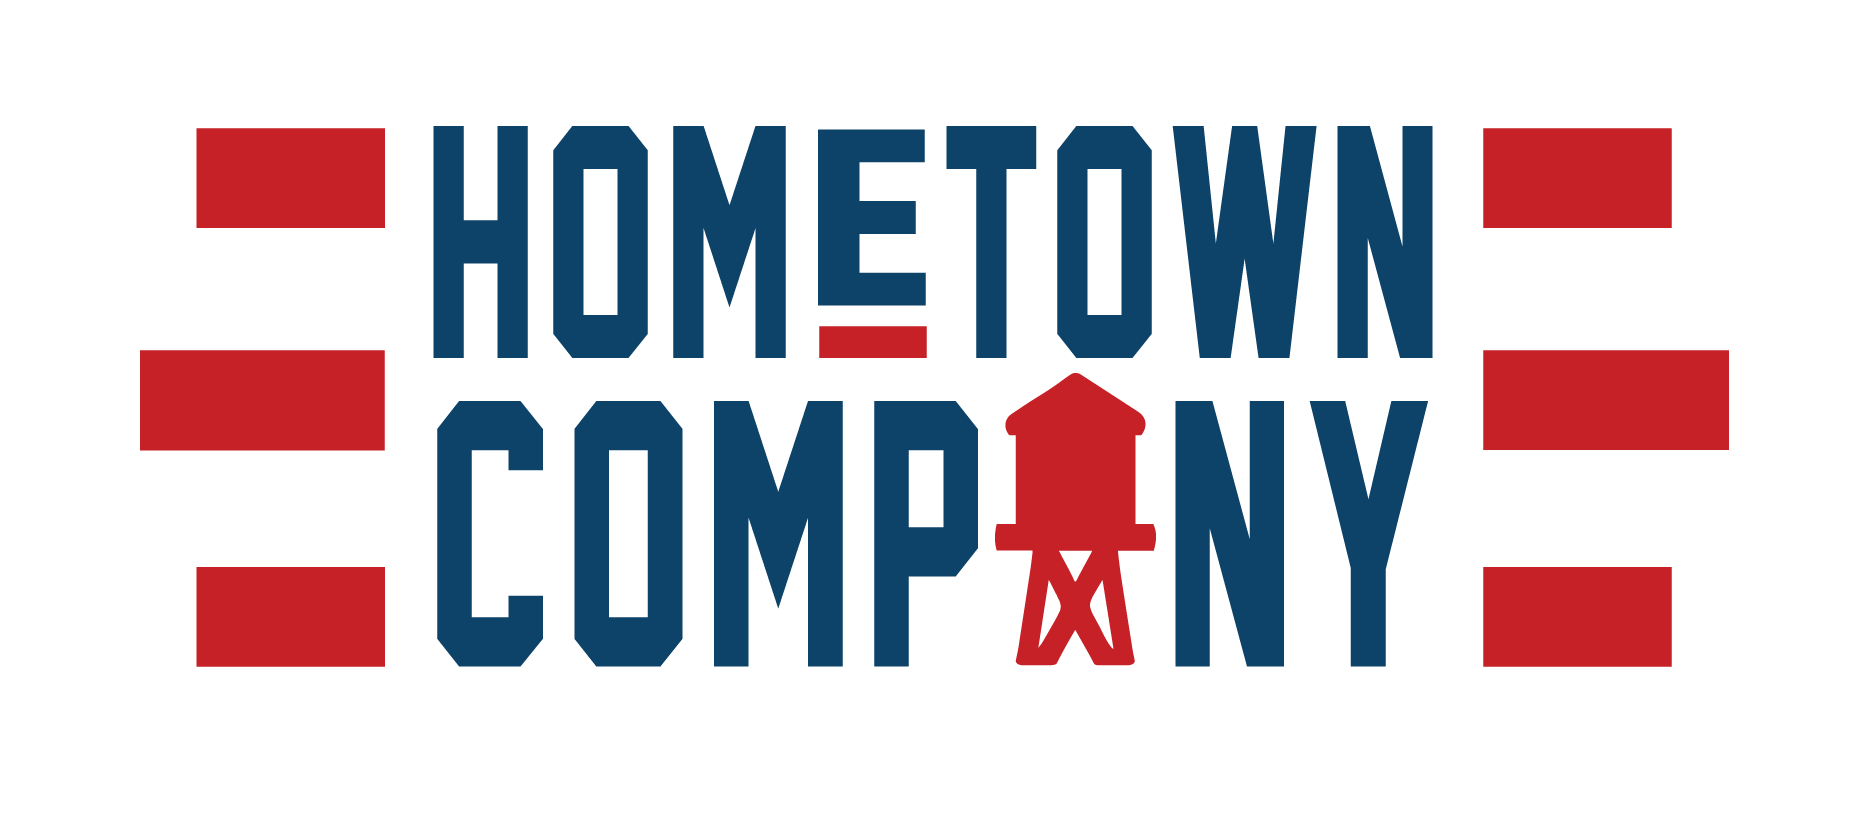 Hometown Company 